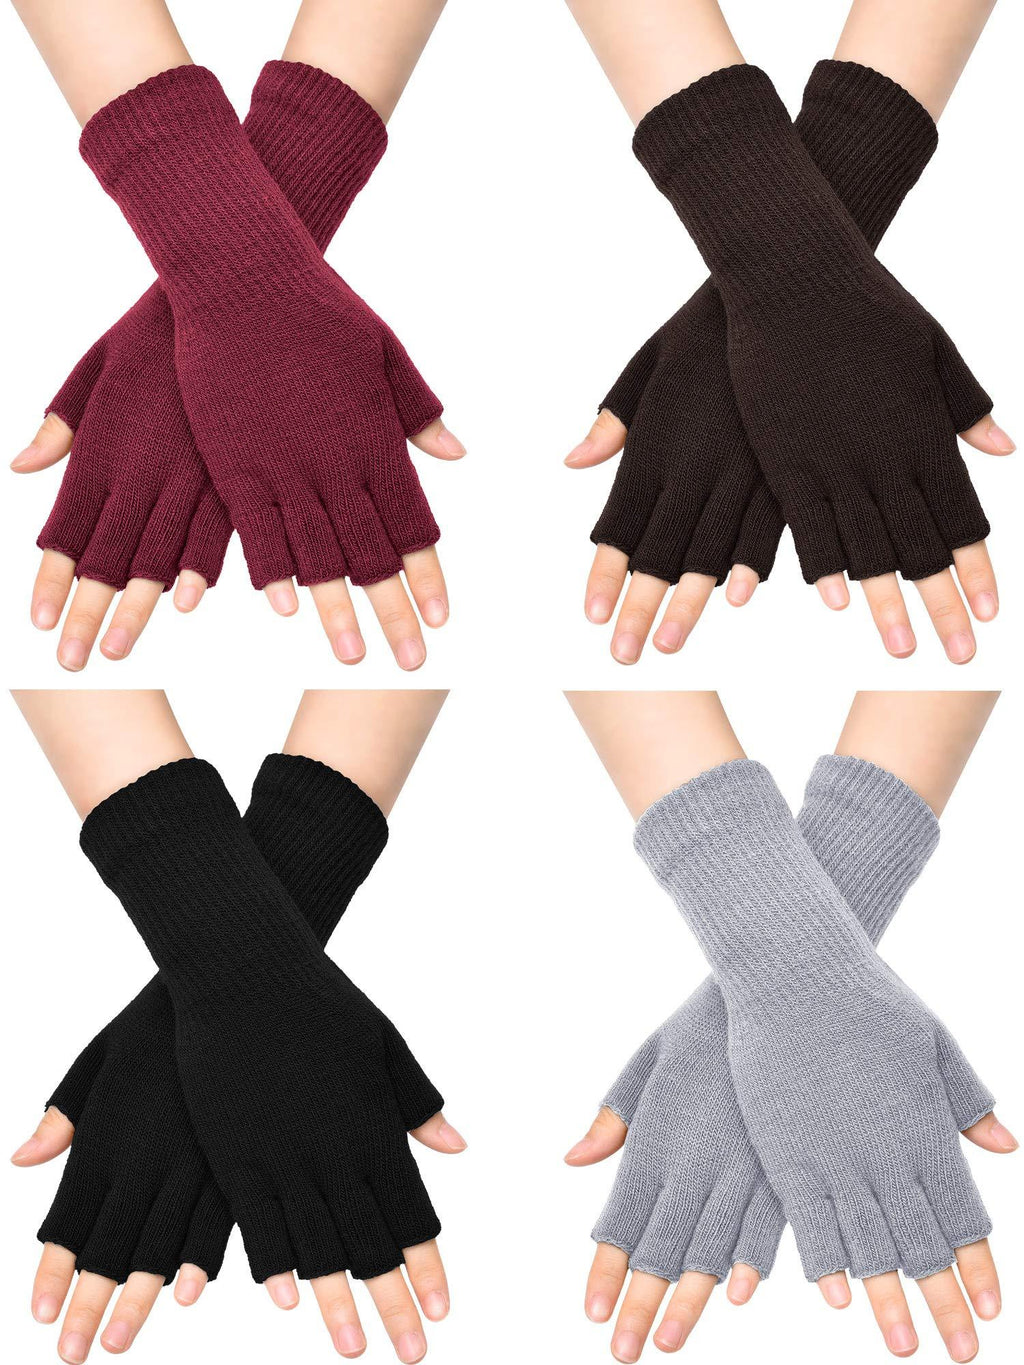 [Australia] - Unisex Half Finger Gloves Winter Stretchy Knit Fingerless Typing Gloves Black, Red, Light Grey, Coffee 4 